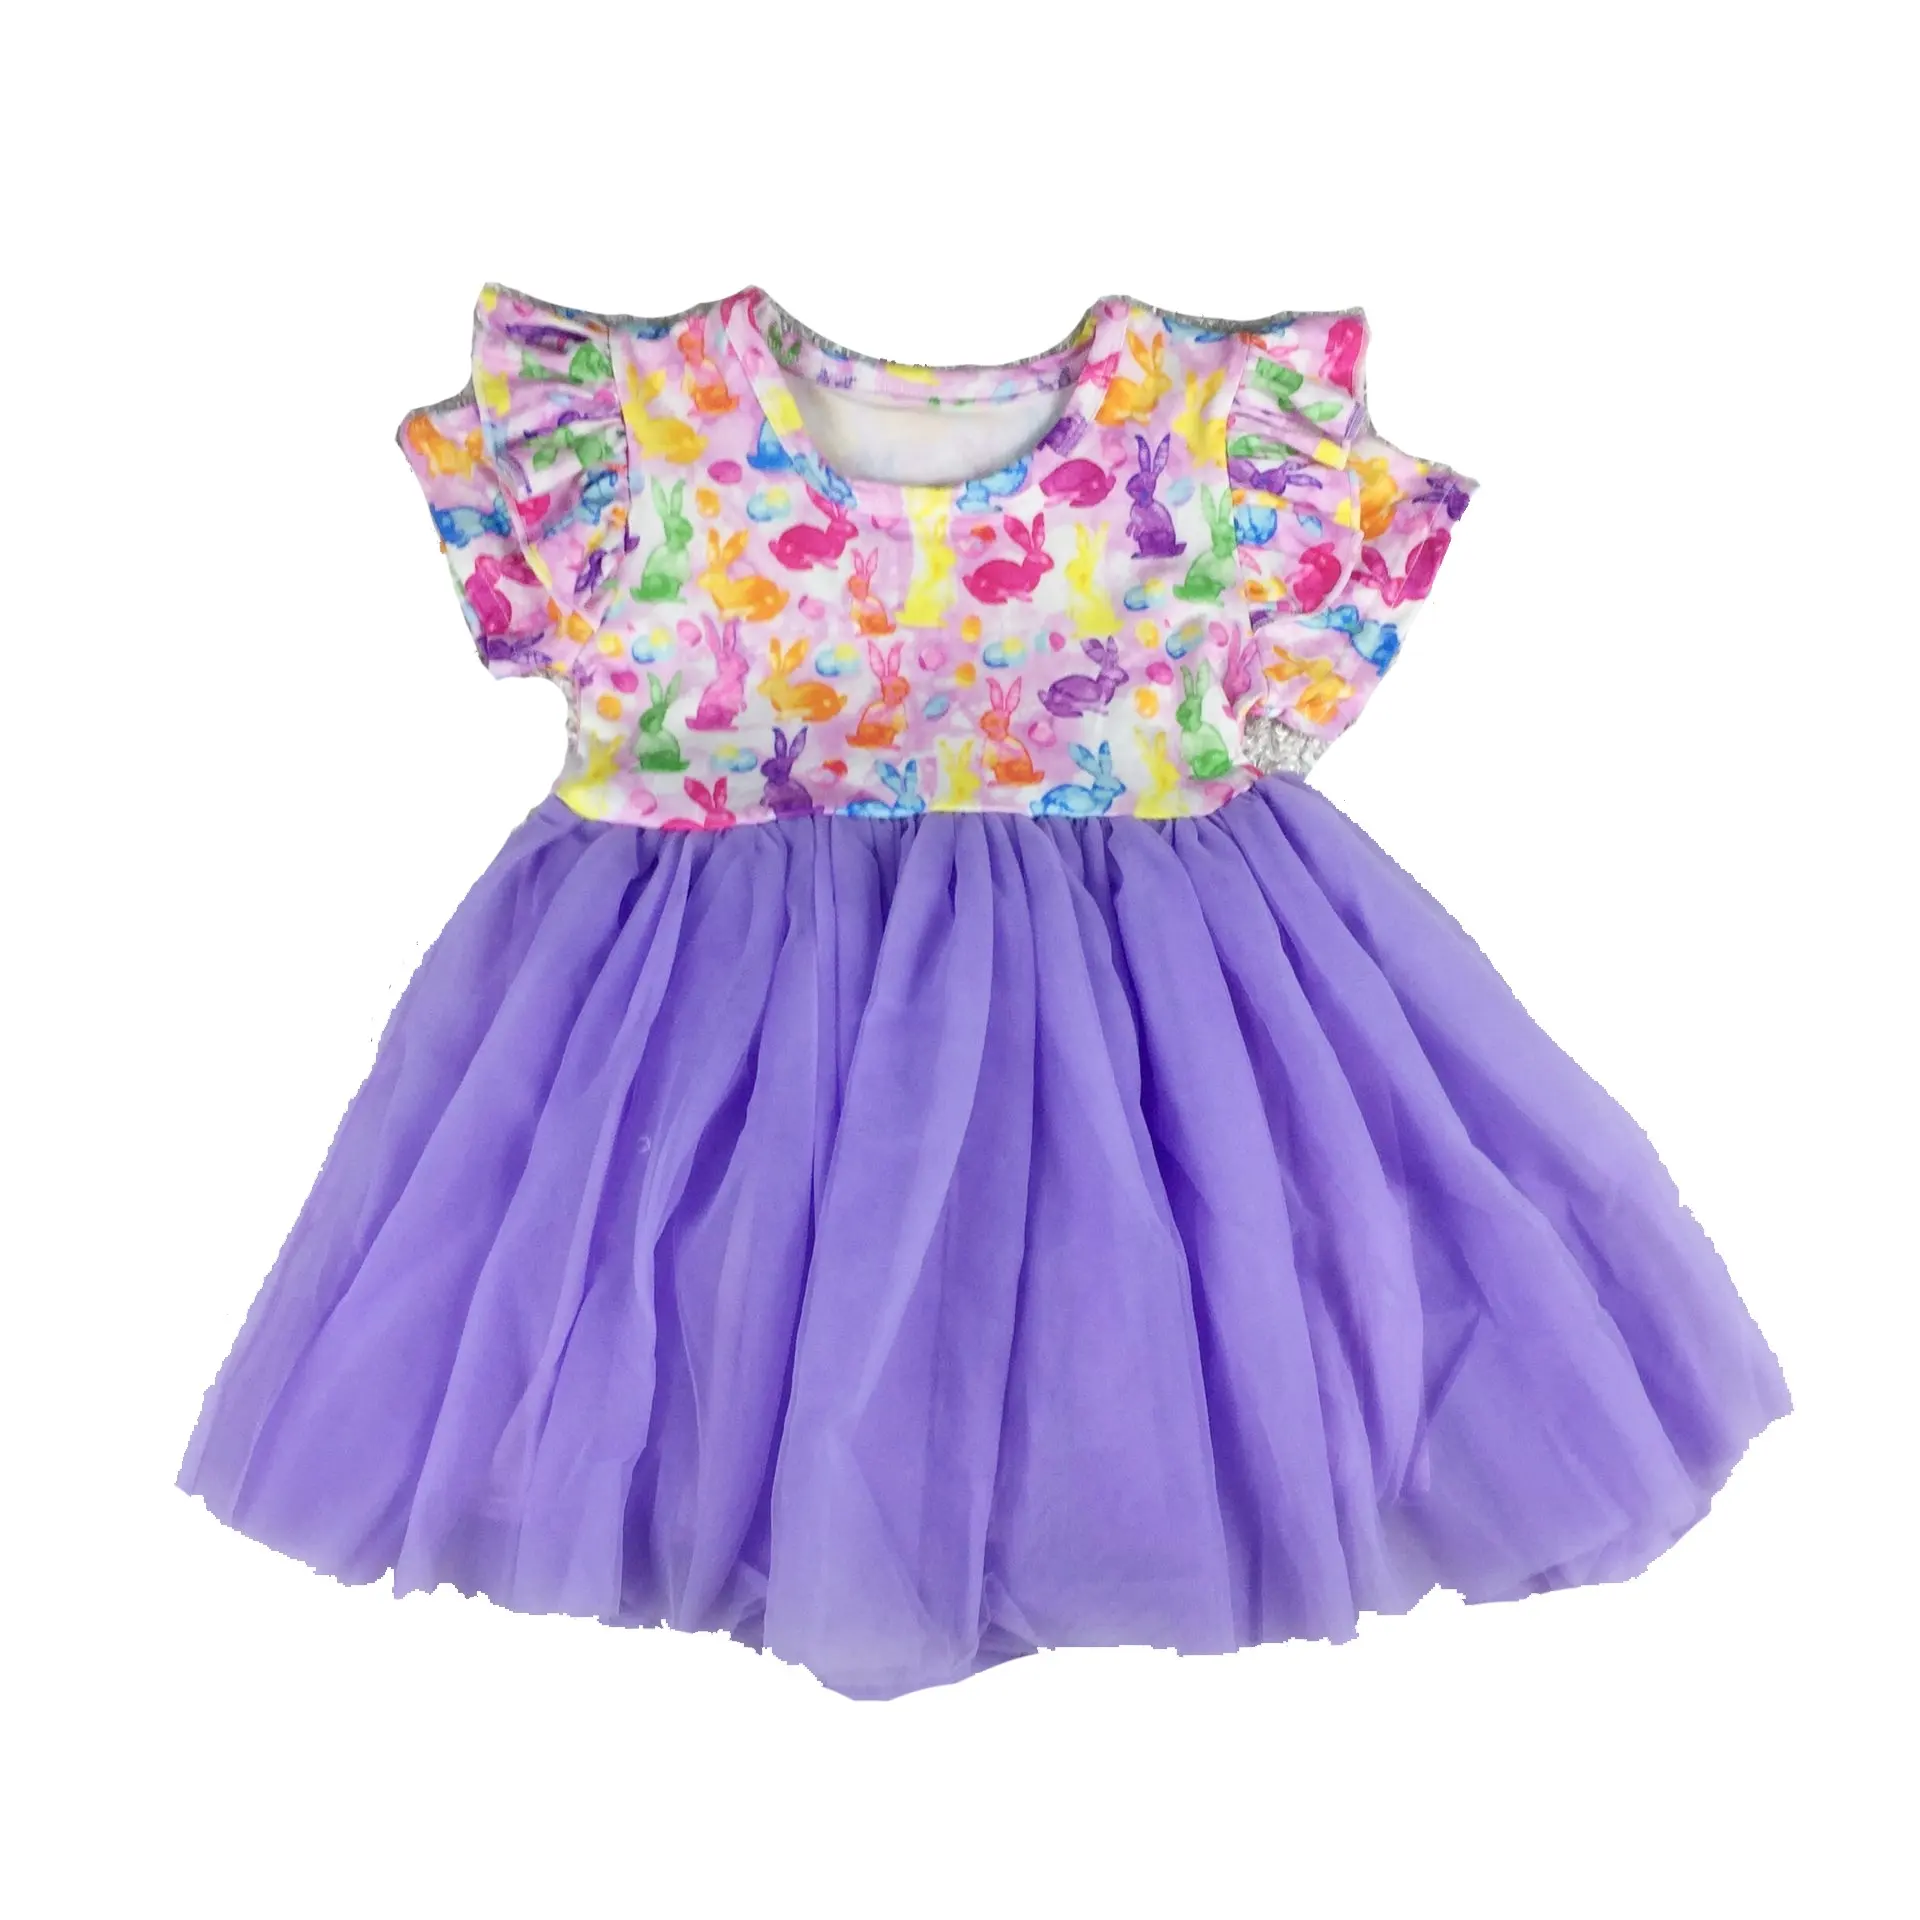 Liangzhe rok putri lembut remaja wanita, gaun ungu Puffy cetak kelinci clourful Model baru ODM